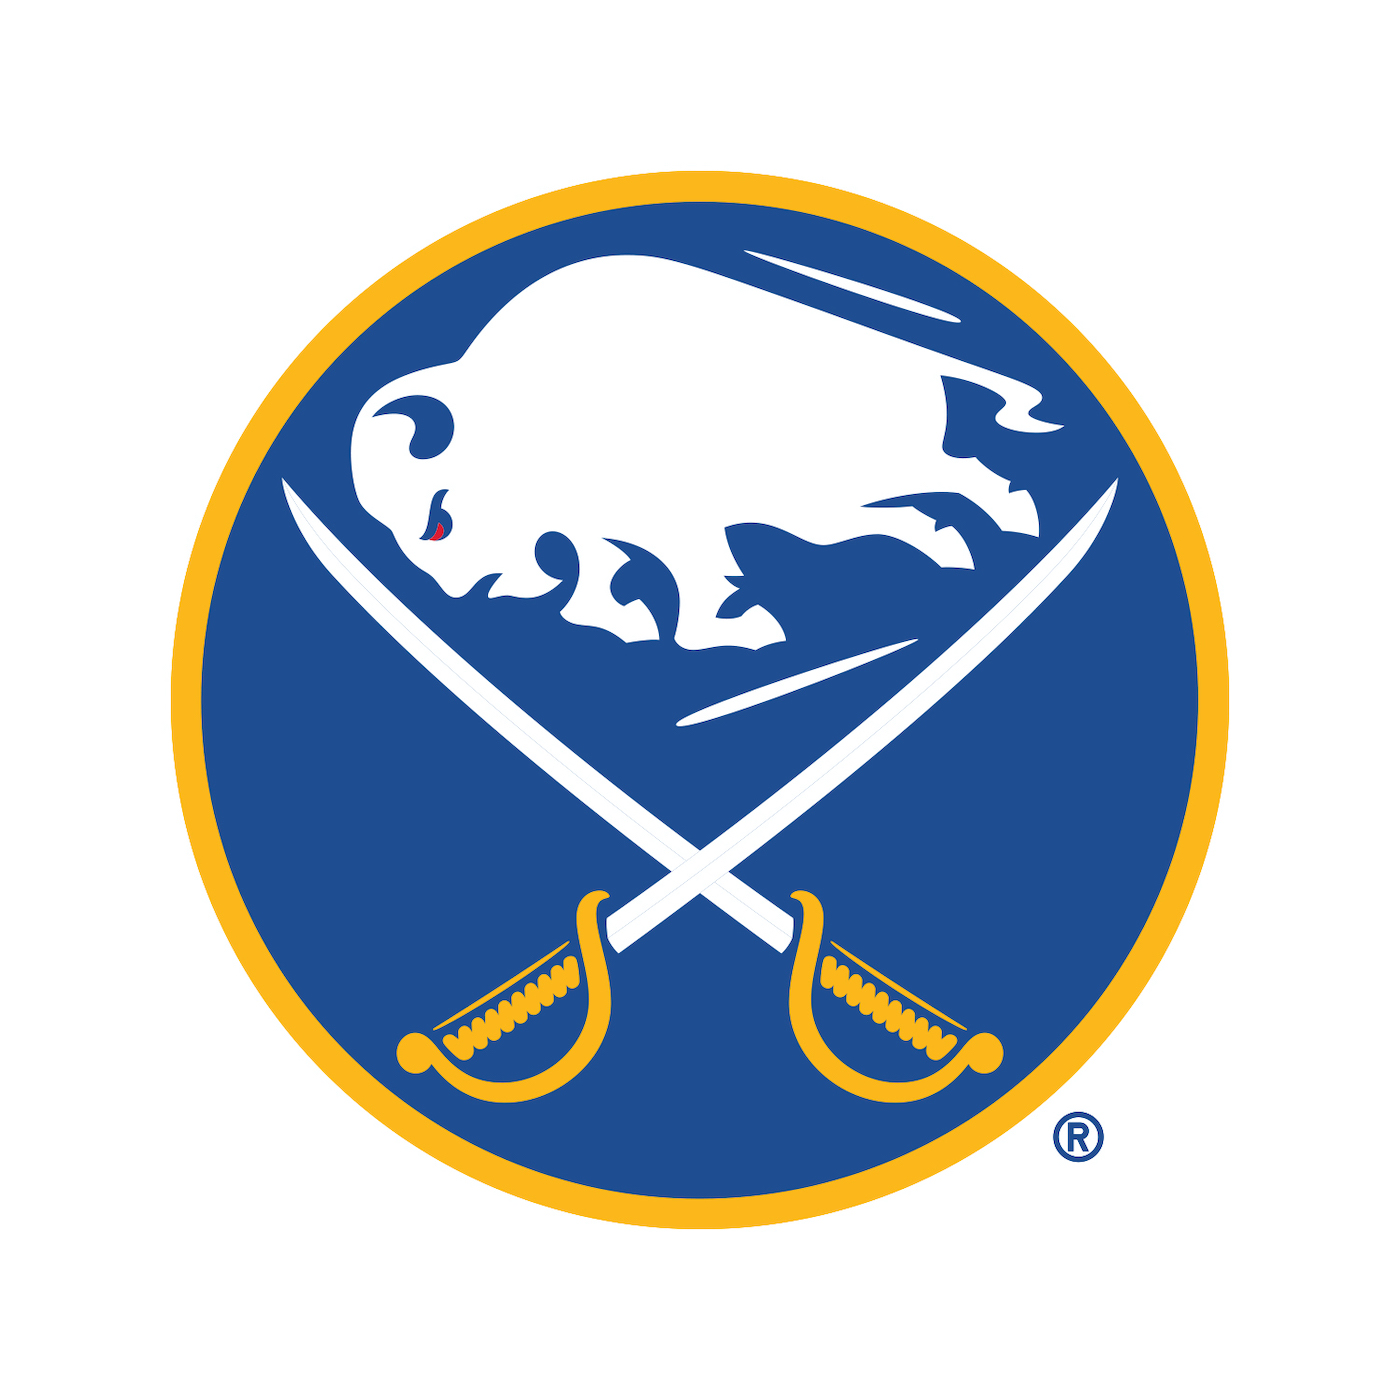 Buffalo Sabres logo courtesy of Pegula Sports & Entertainment.